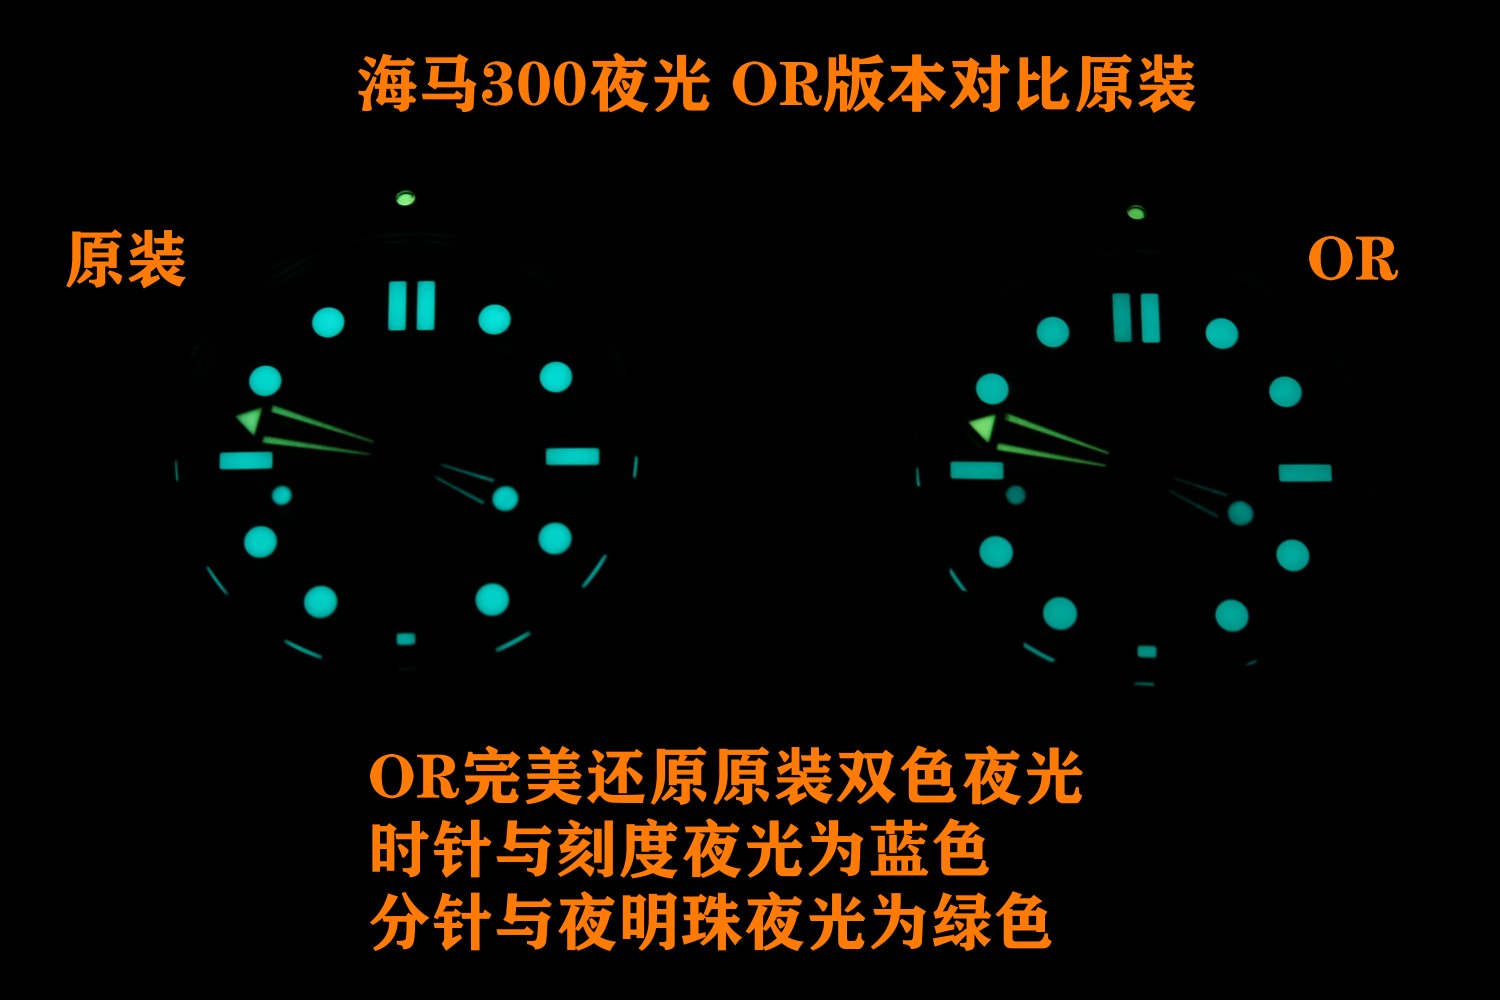 OR厂海马300m欧米茄手表对比正品怎么样